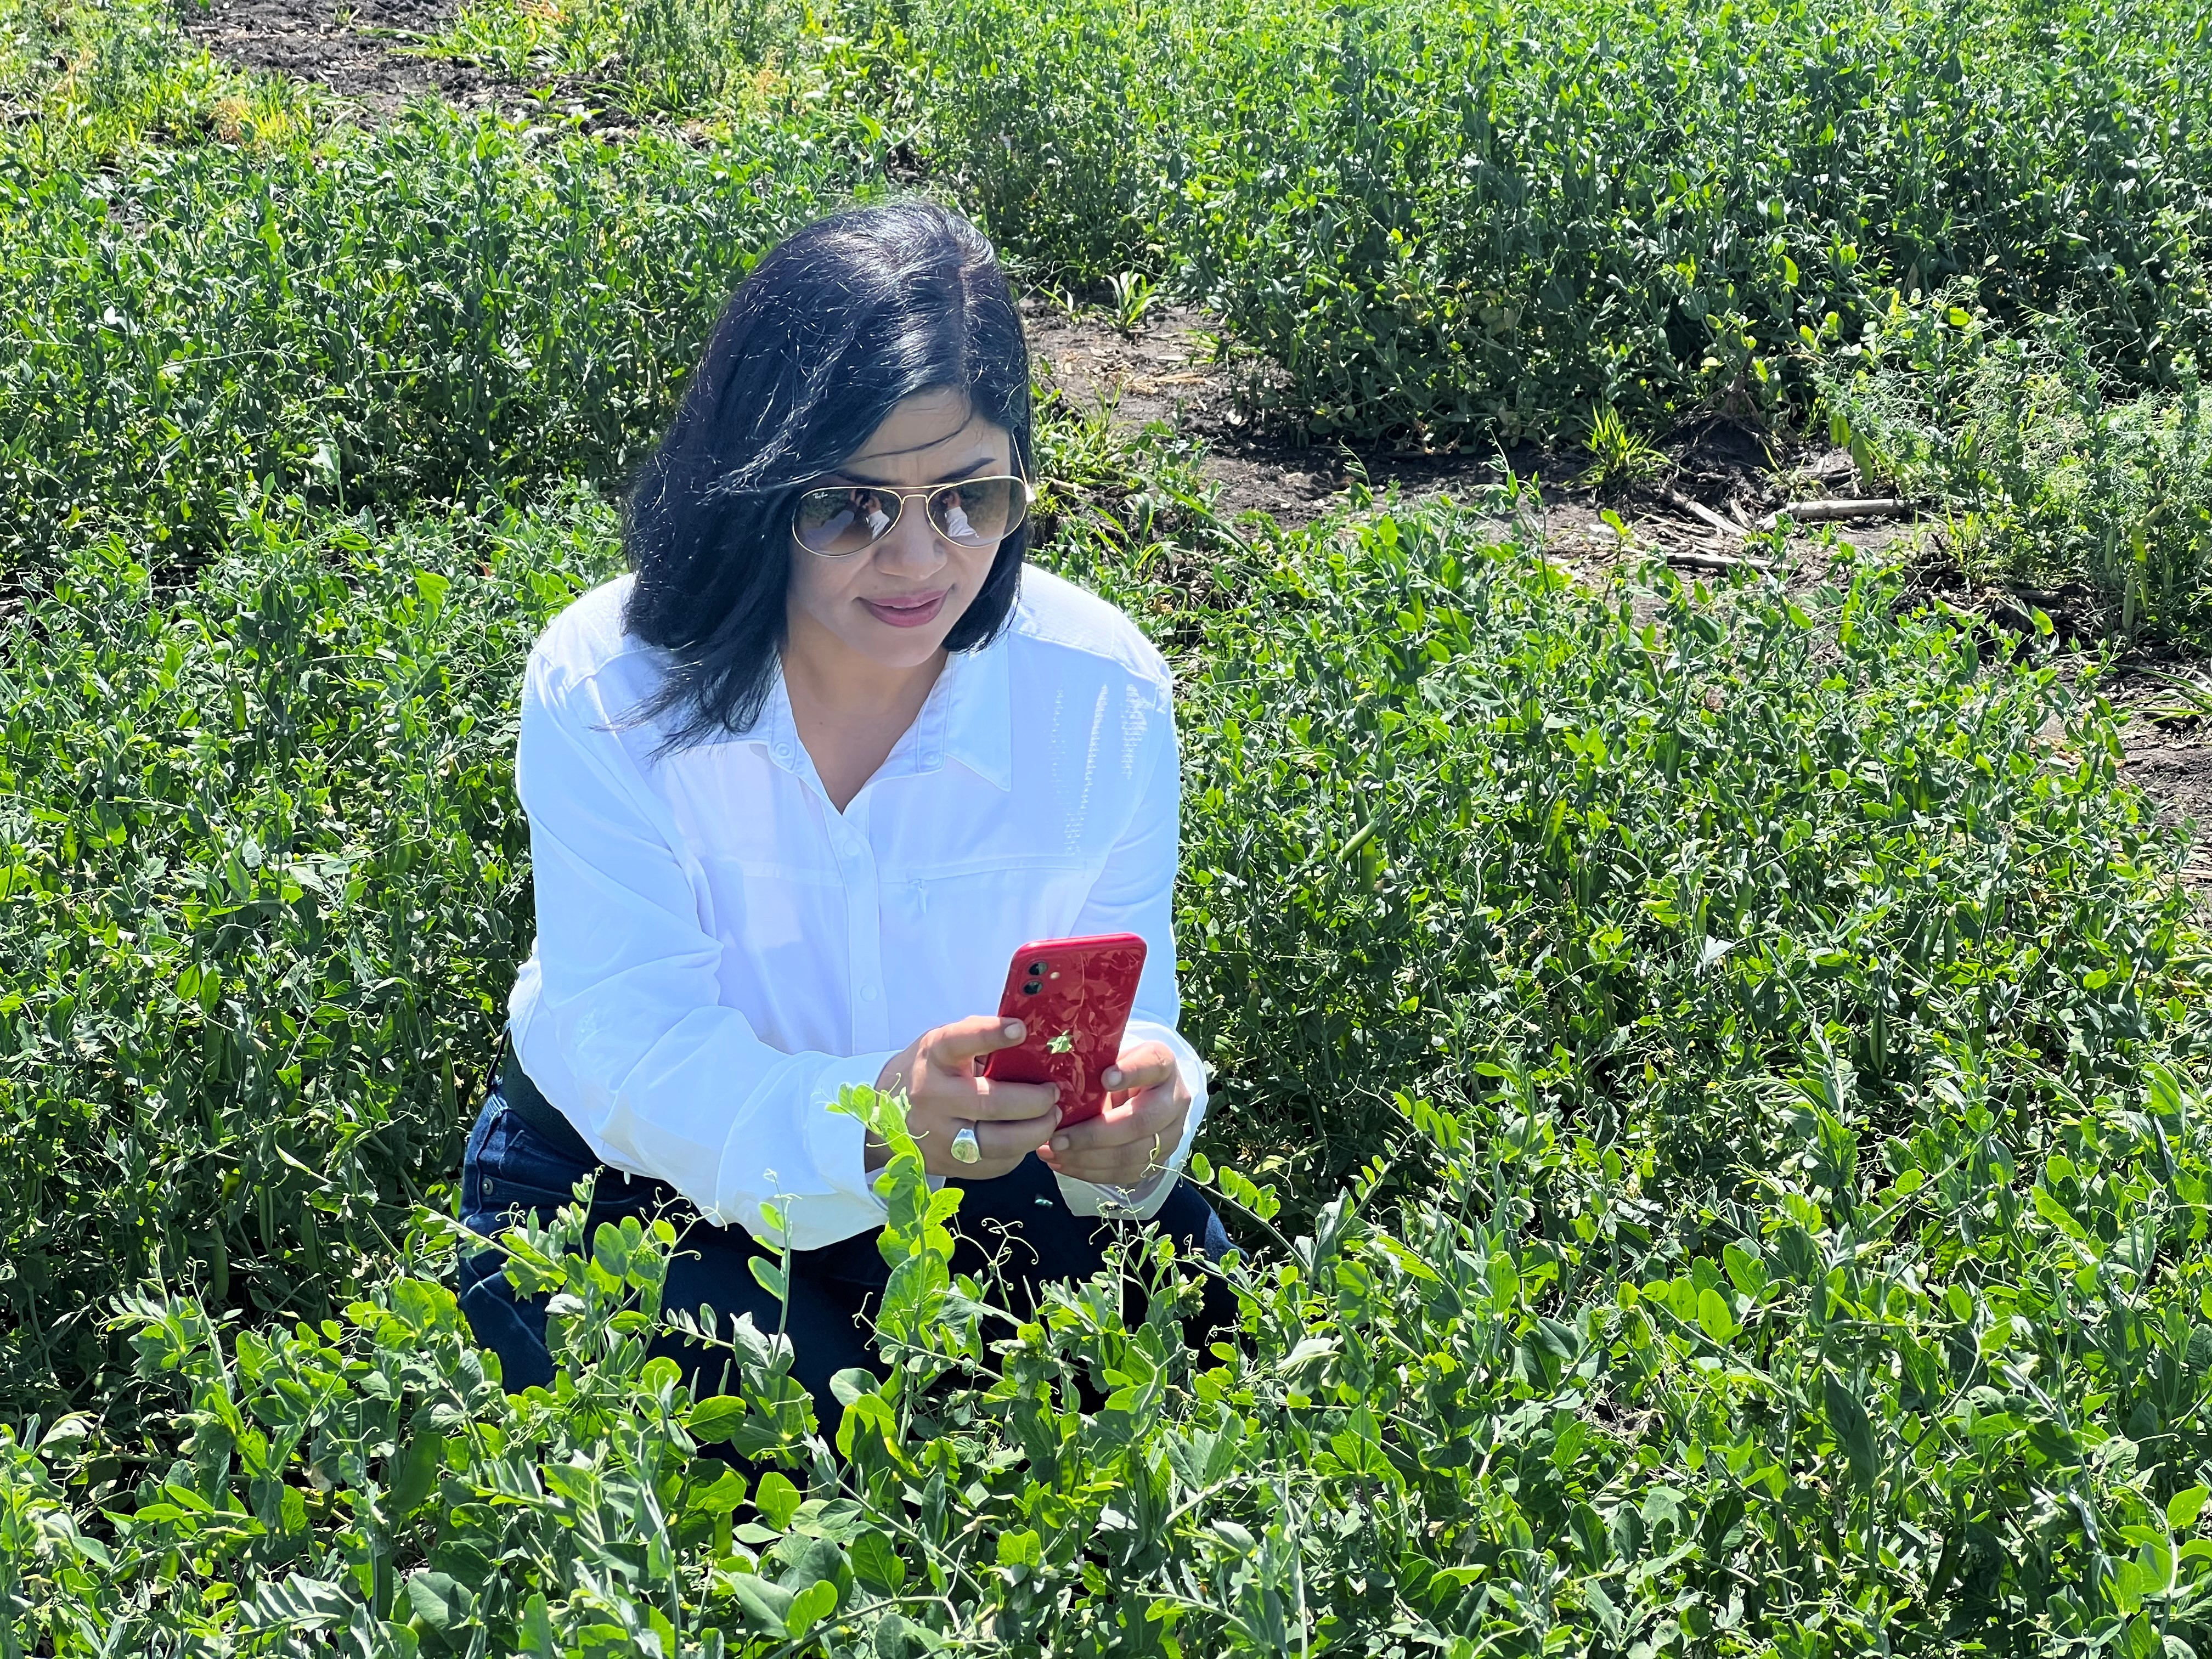 Arti Singh taking pictures in a farm field